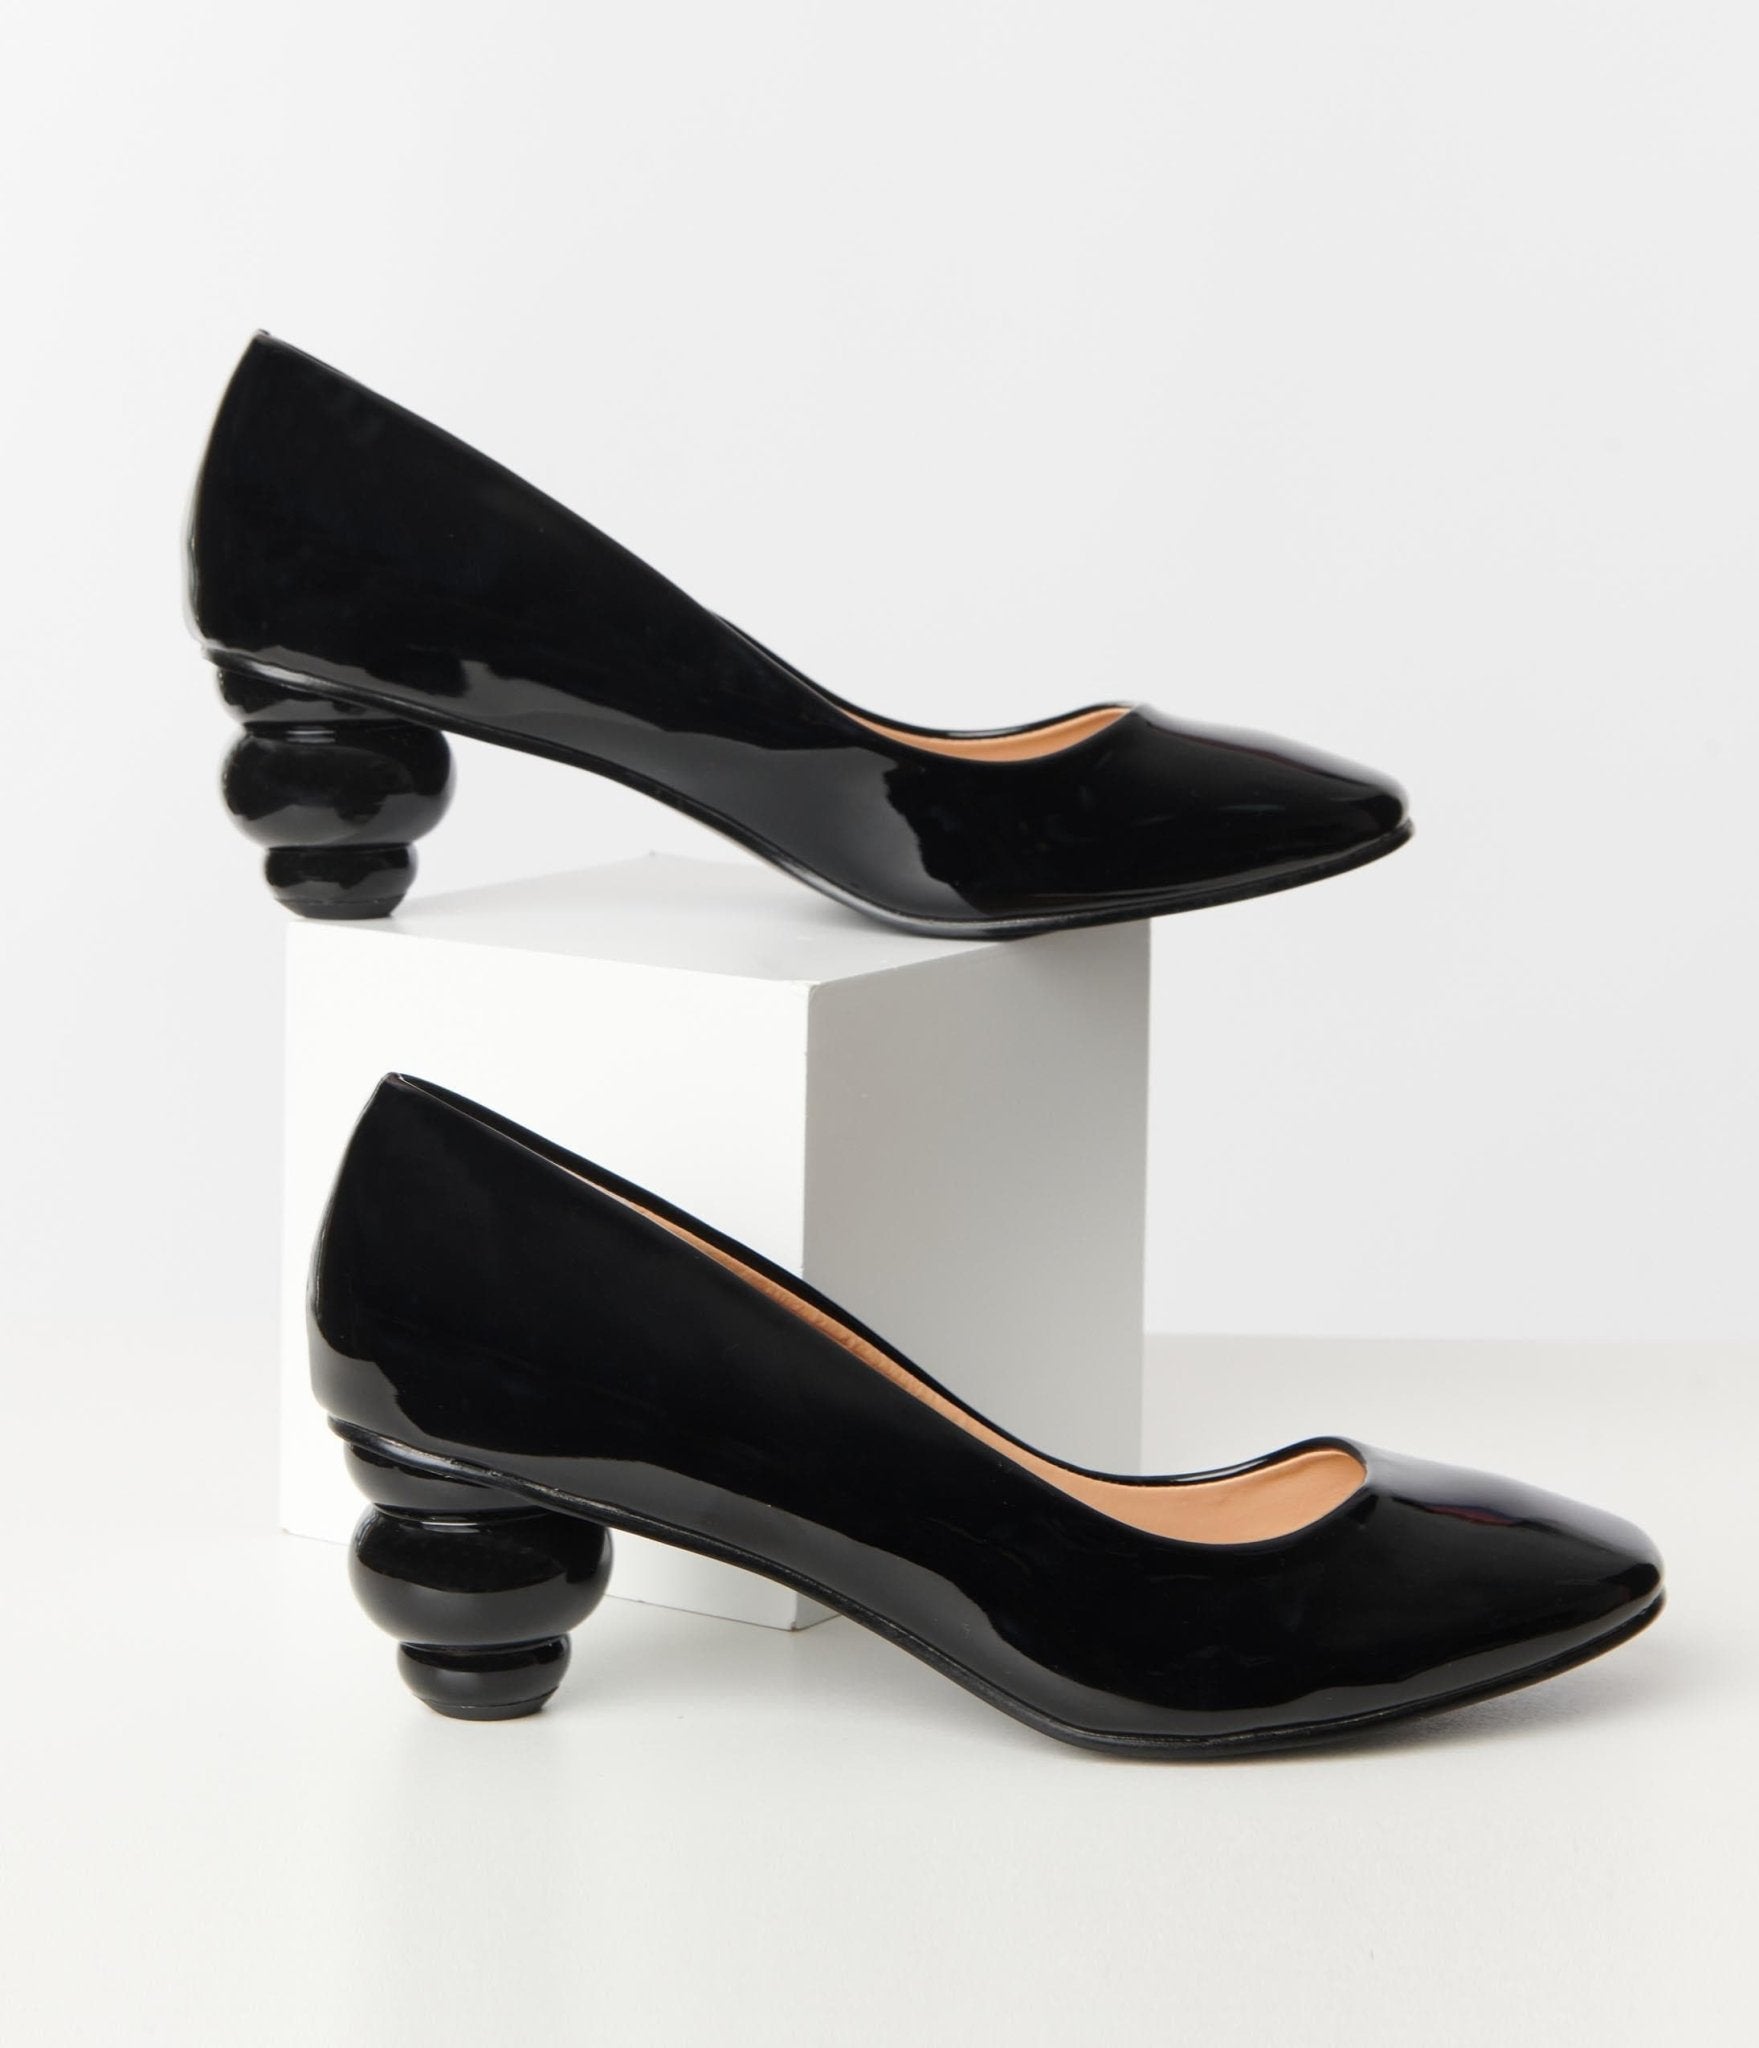 Black Patent Leather Peep Toe Heels Stiletto Heel Double D'orsay Pumps |FSJshoes